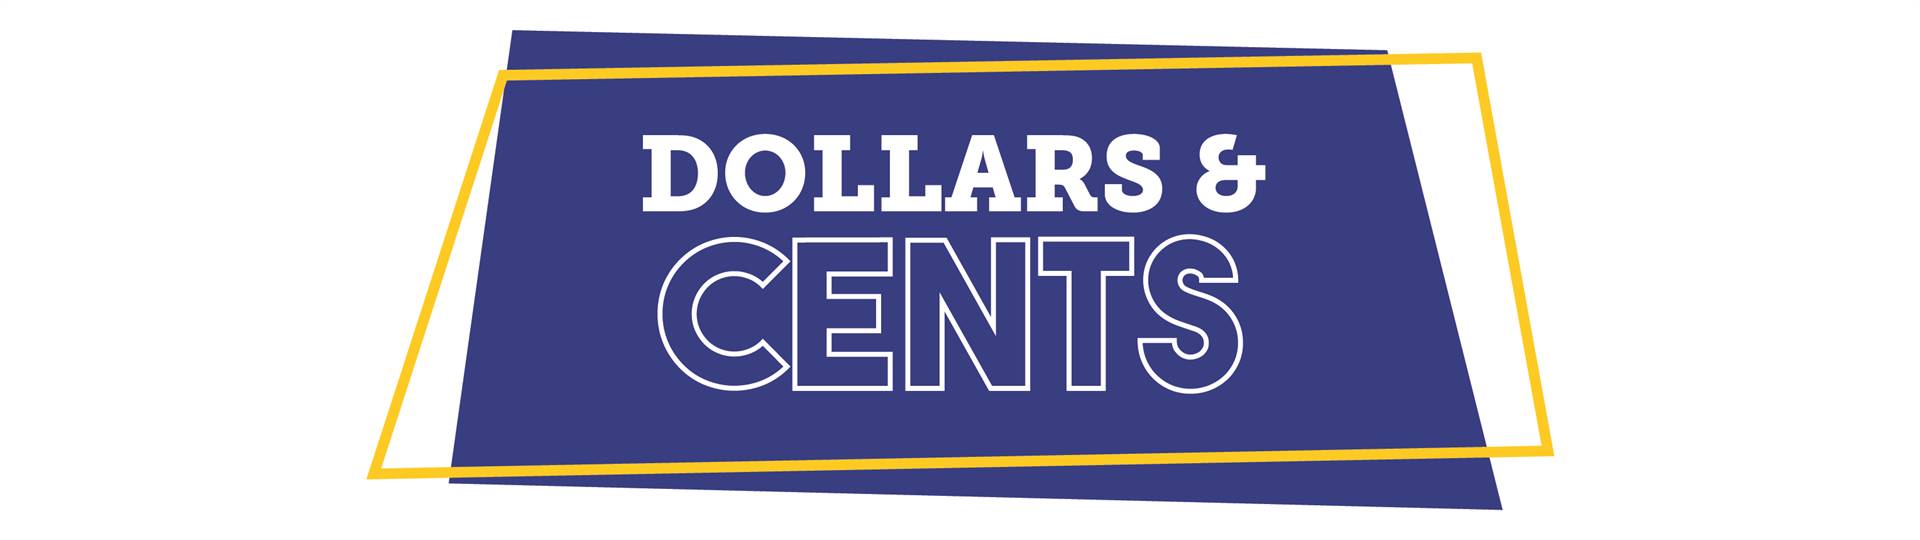 Dollars & Cents